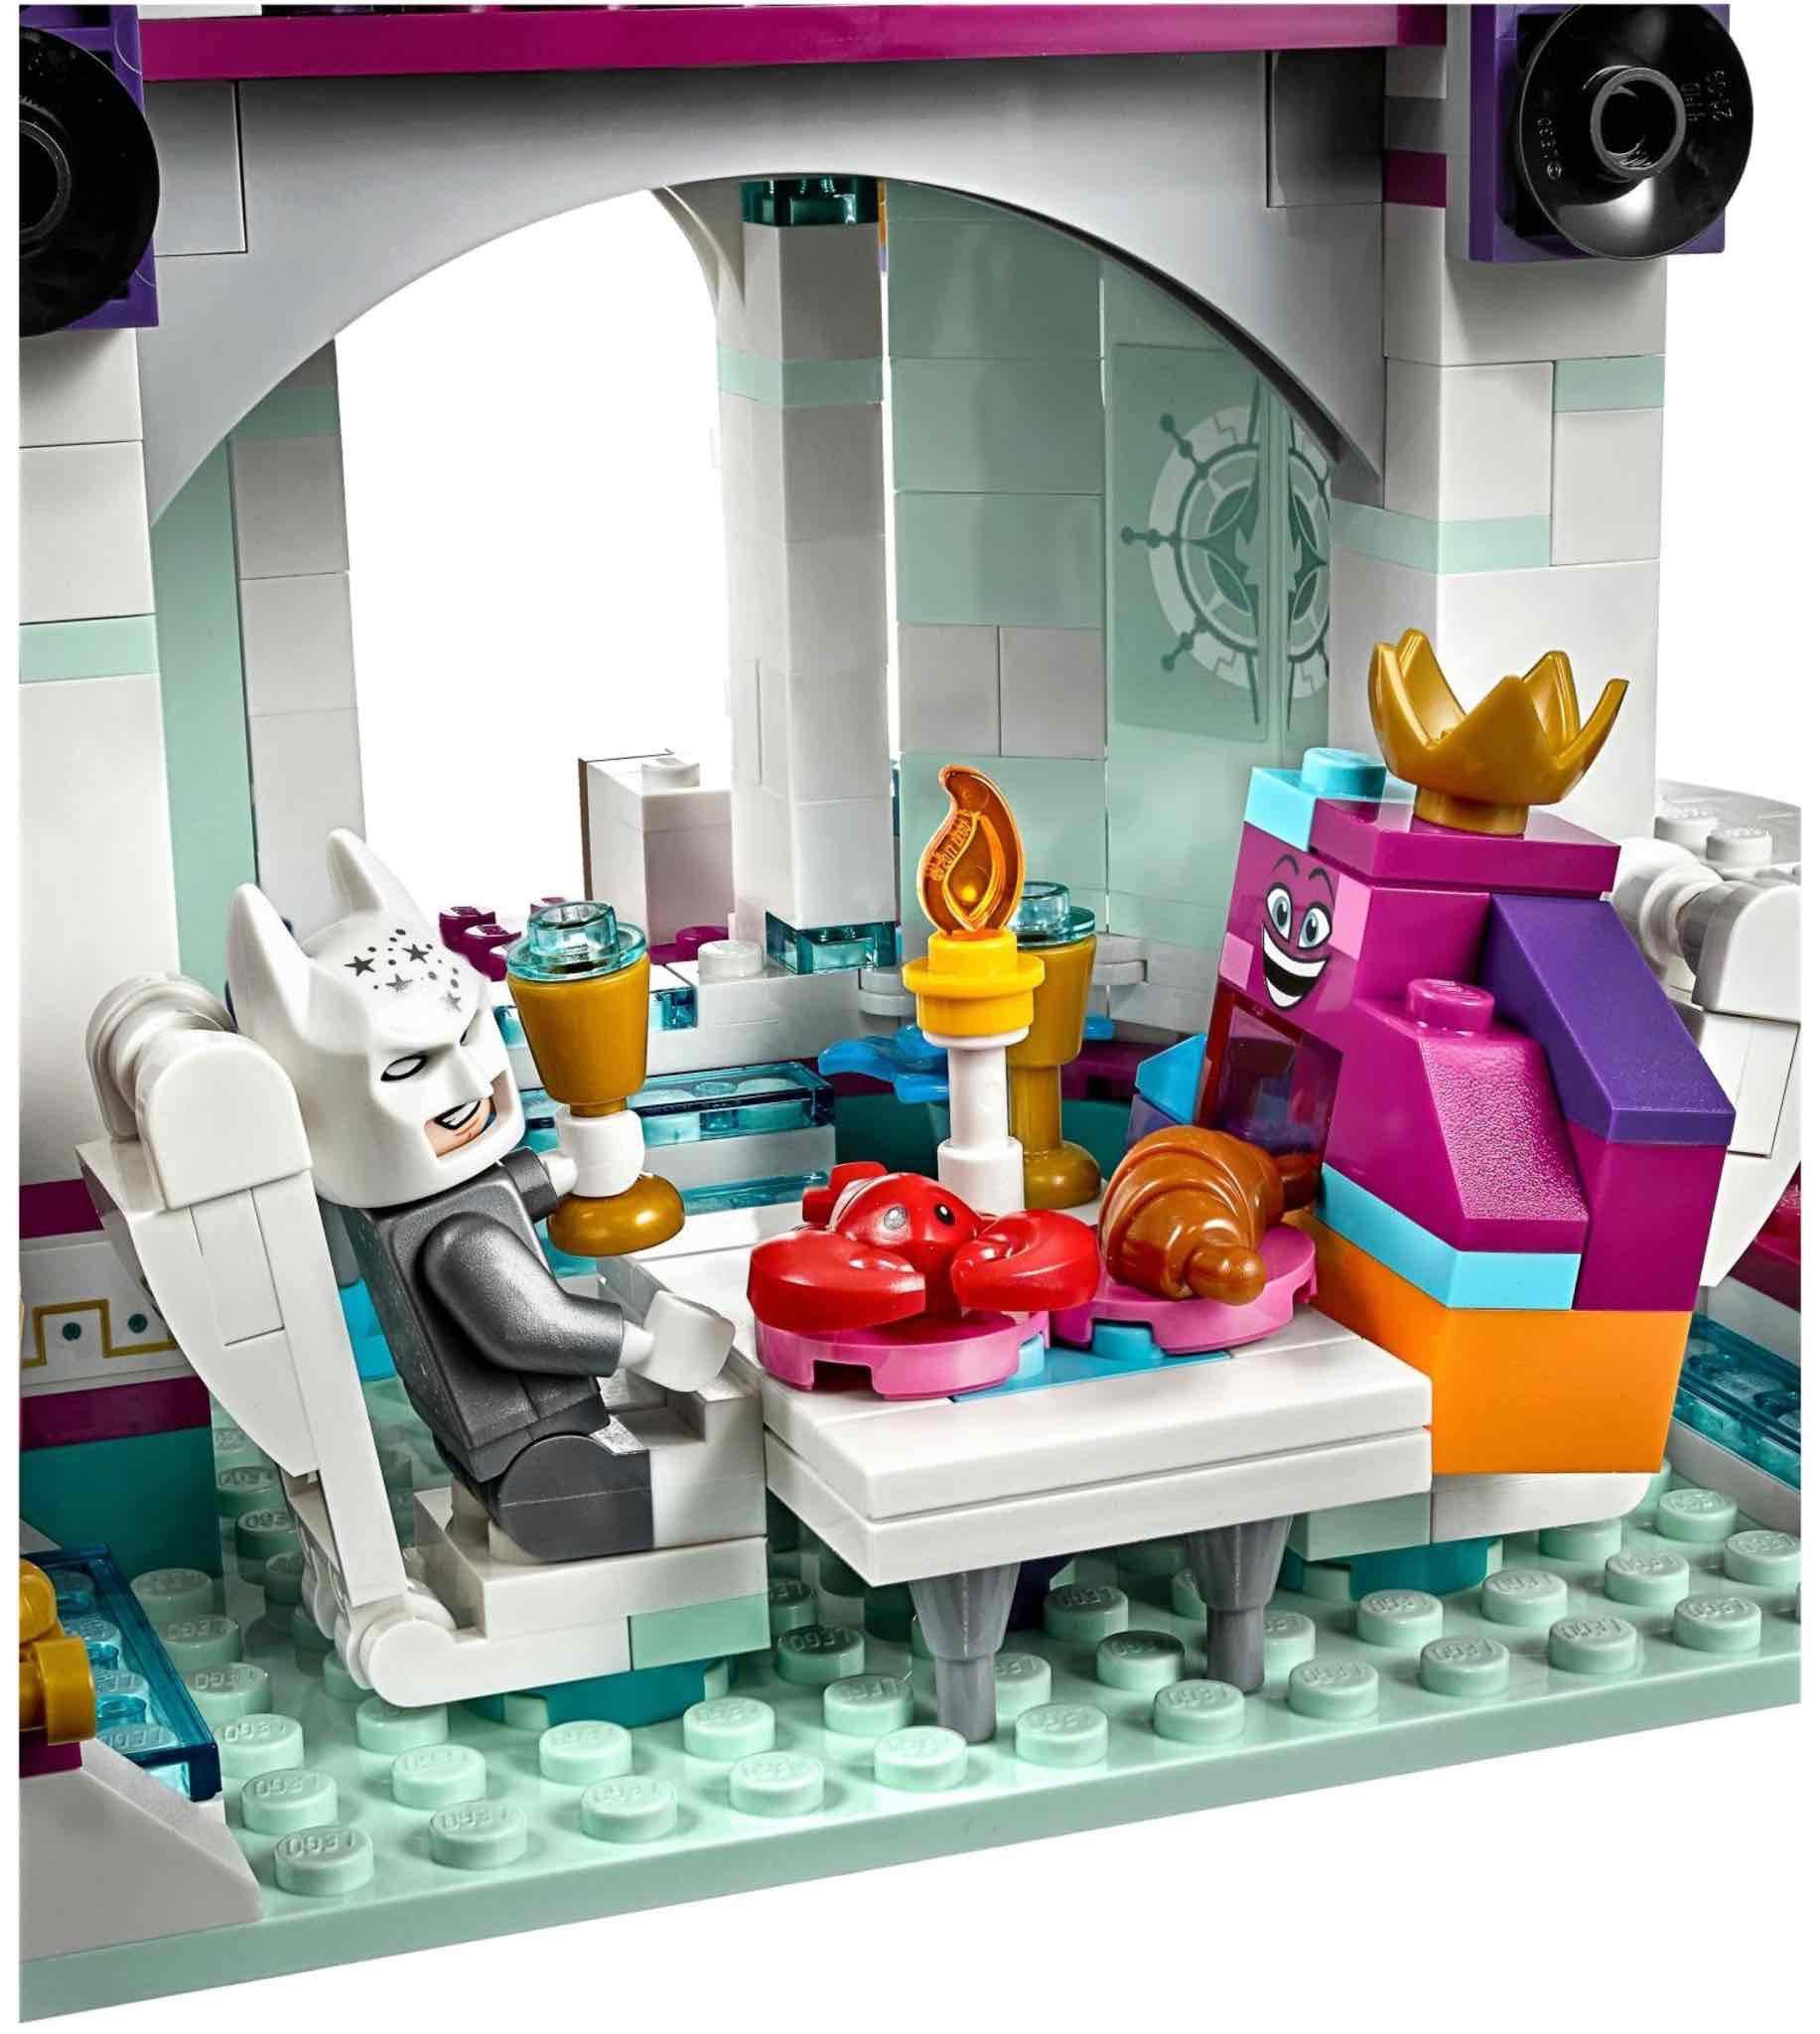 Ne tako zlobna' vesoljska palača kraljice Karbi - LEGO® Store Slovenija